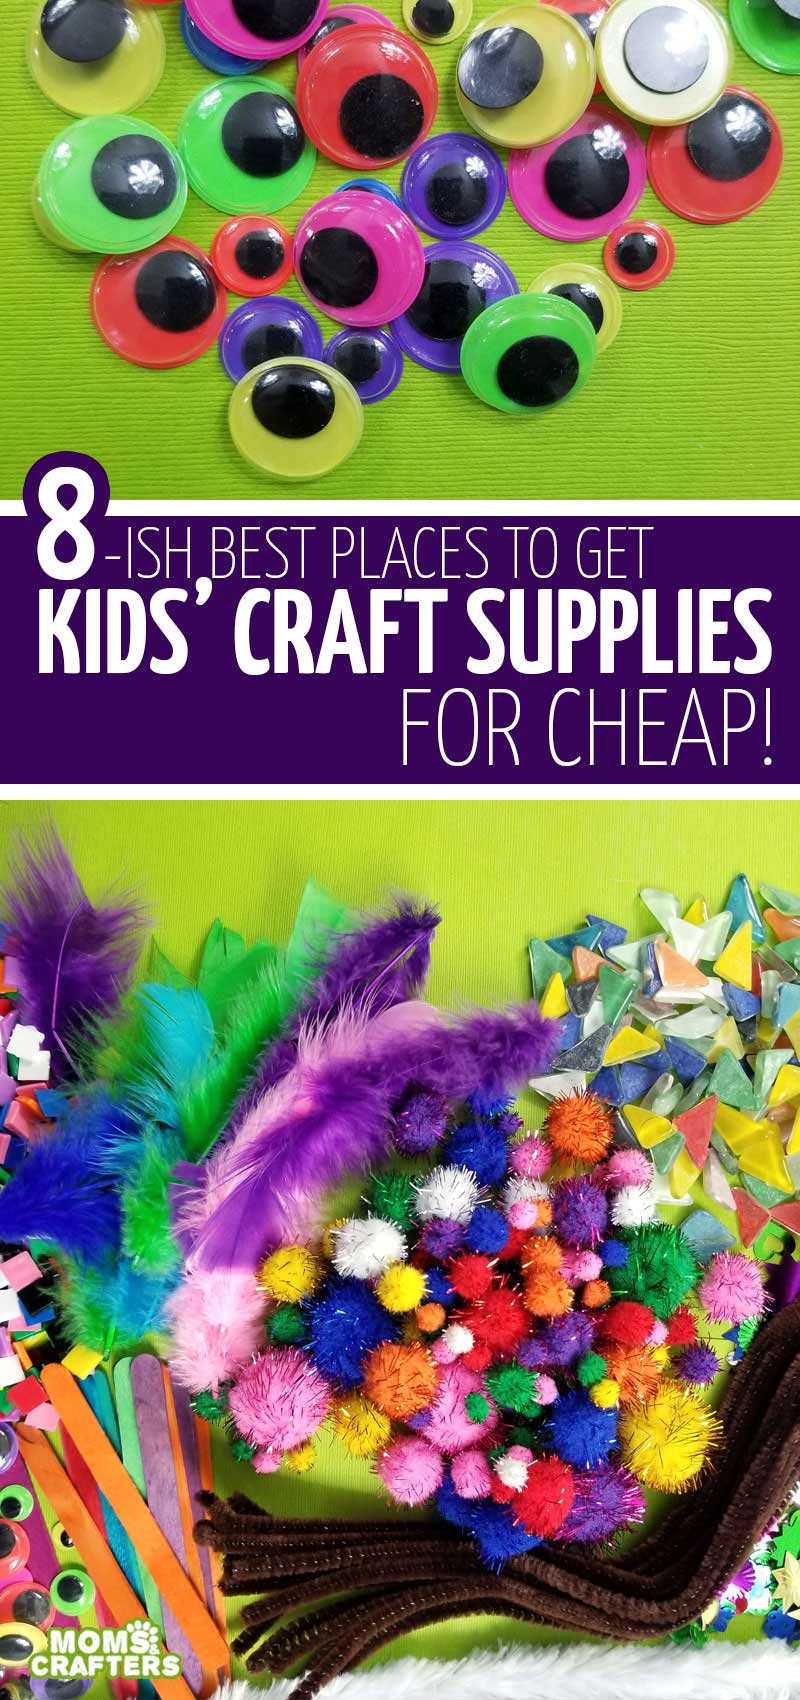 https://www.momsandcrafters.com/wp-content/uploads/2019/02/CHEAP-kids-art-and-craft-supplies-v1.jpg.webp